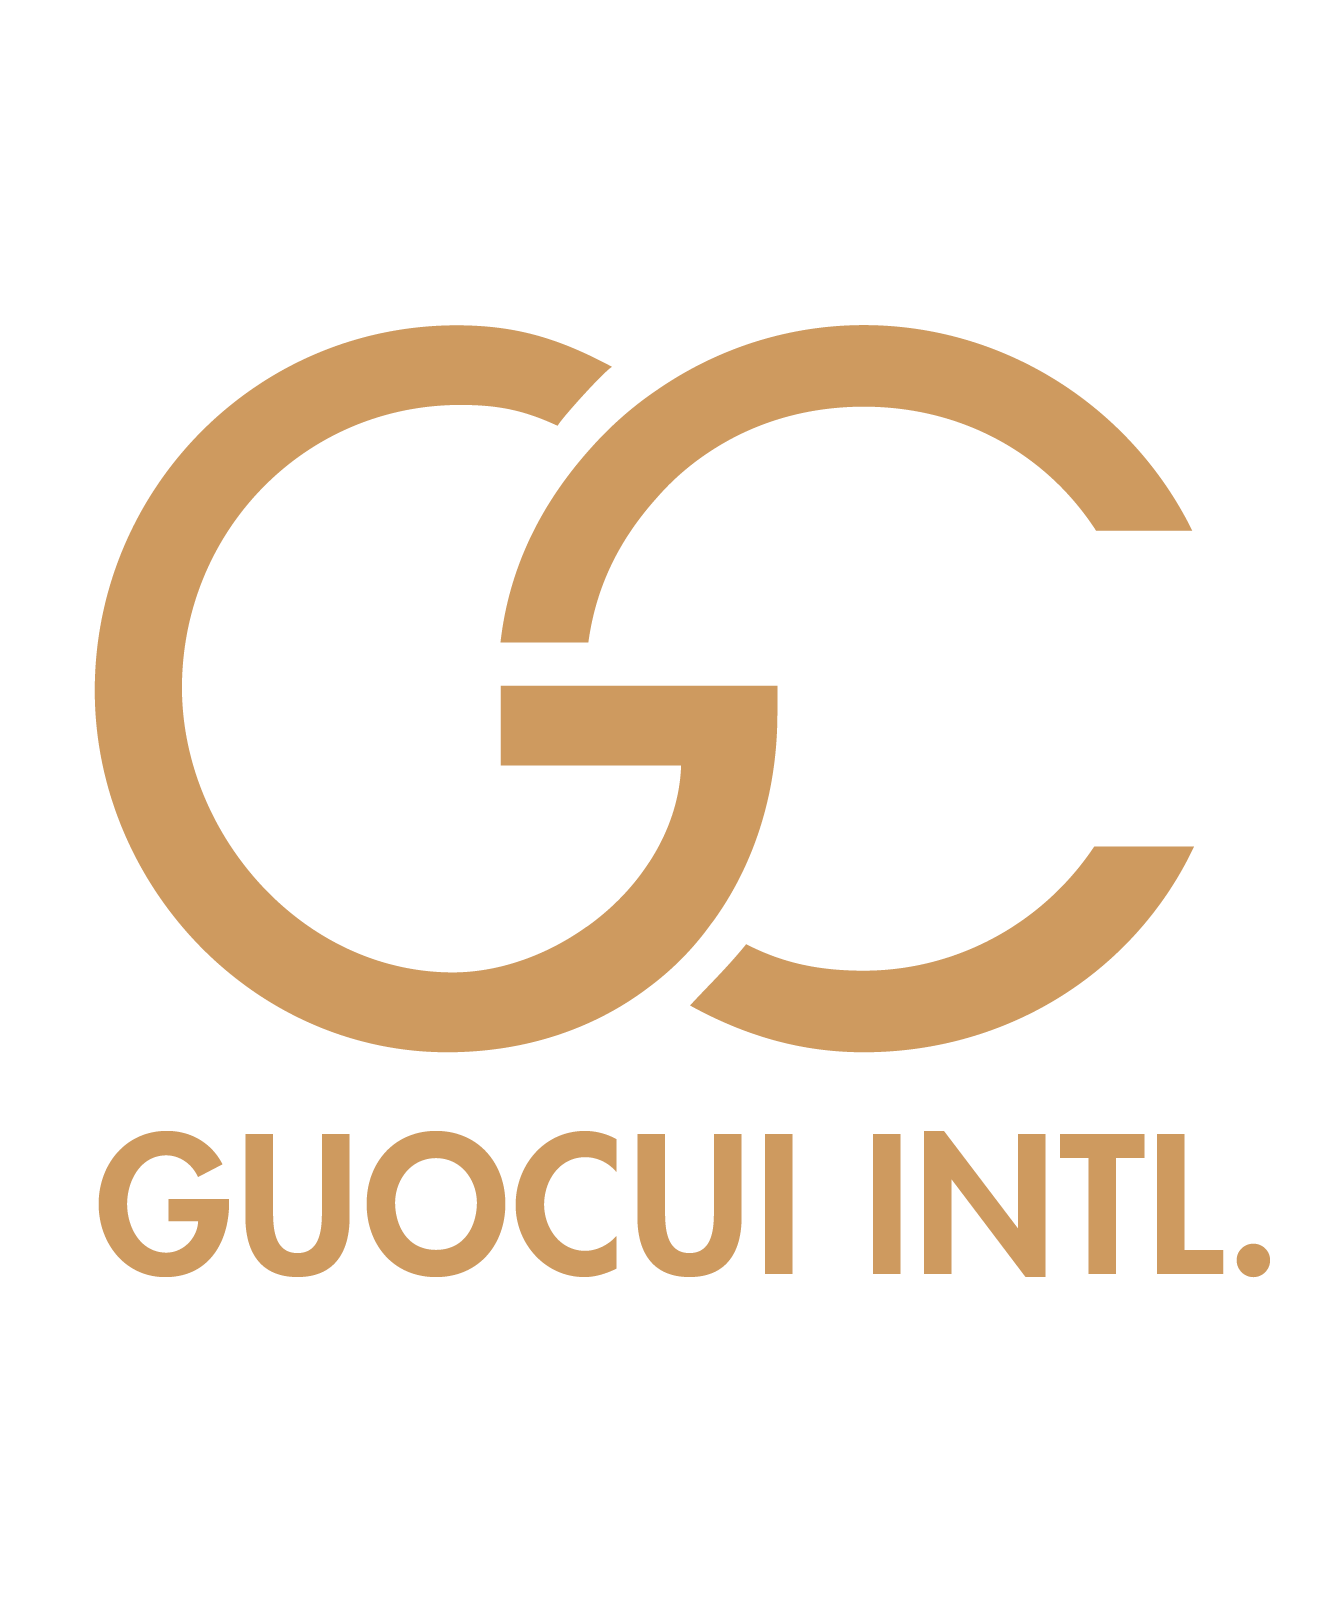 Guocui International